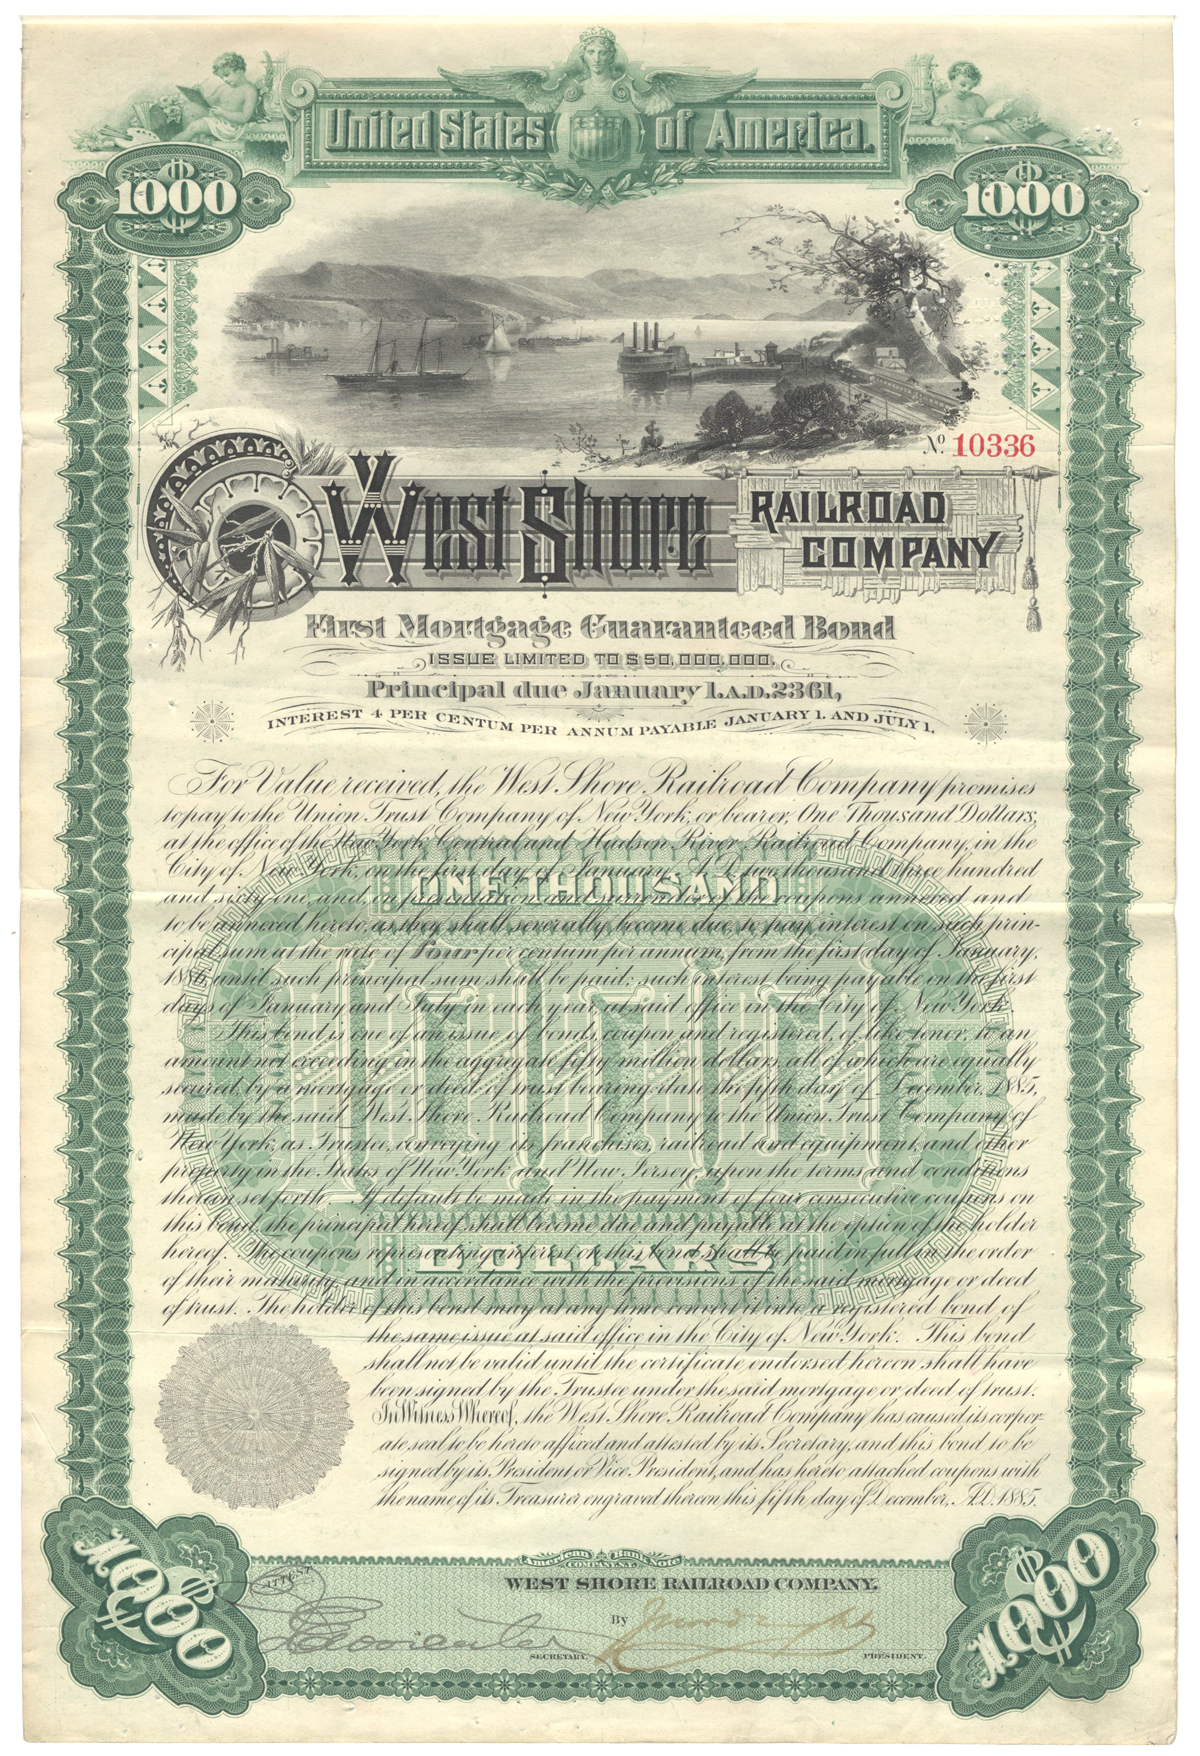 West Shore Railroad Company Bond Certificate